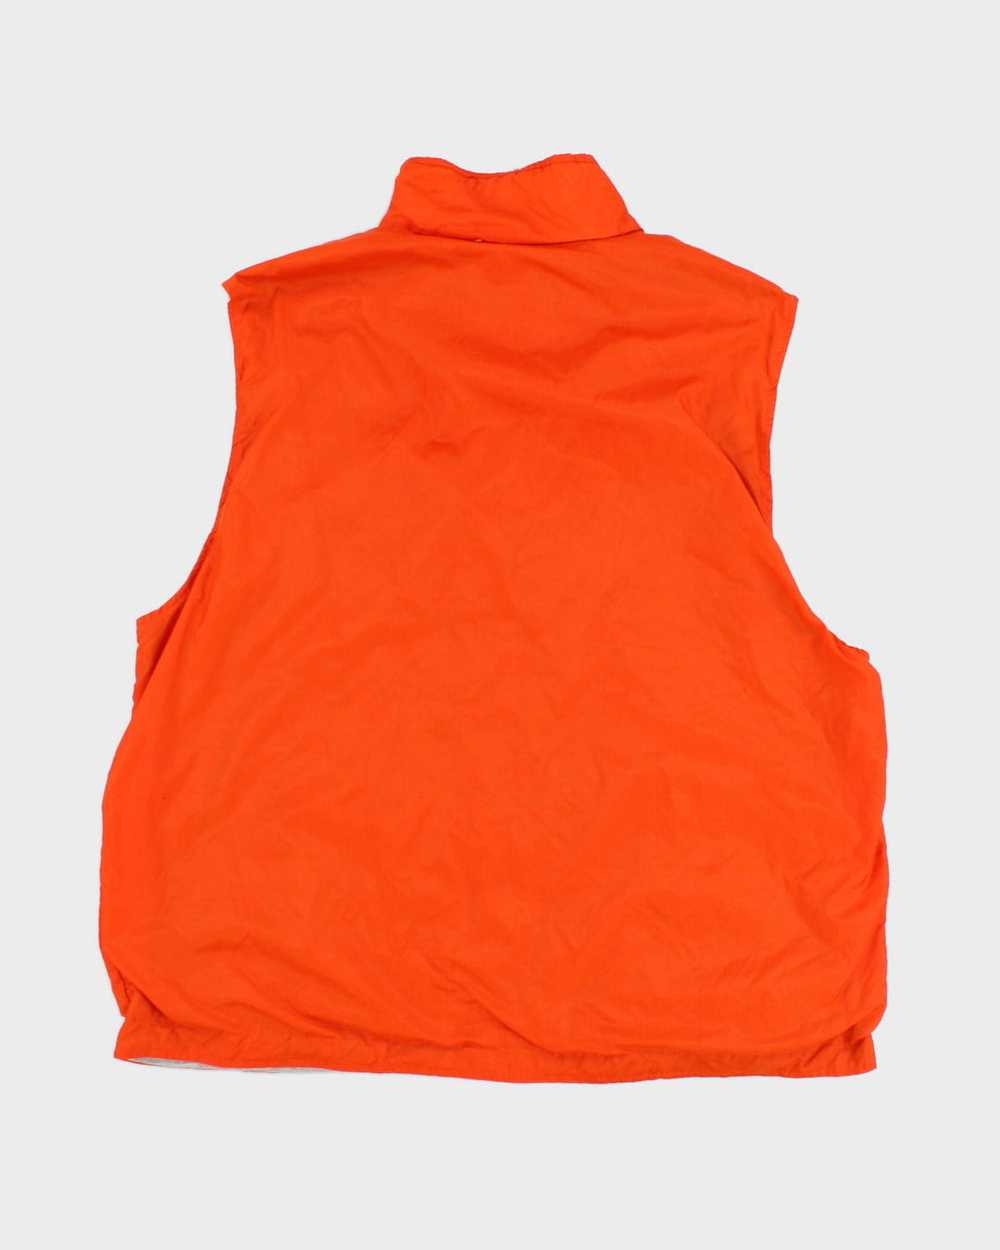 Vintage 90s Nike Reversible Orange/Grey Vest - XL - image 2